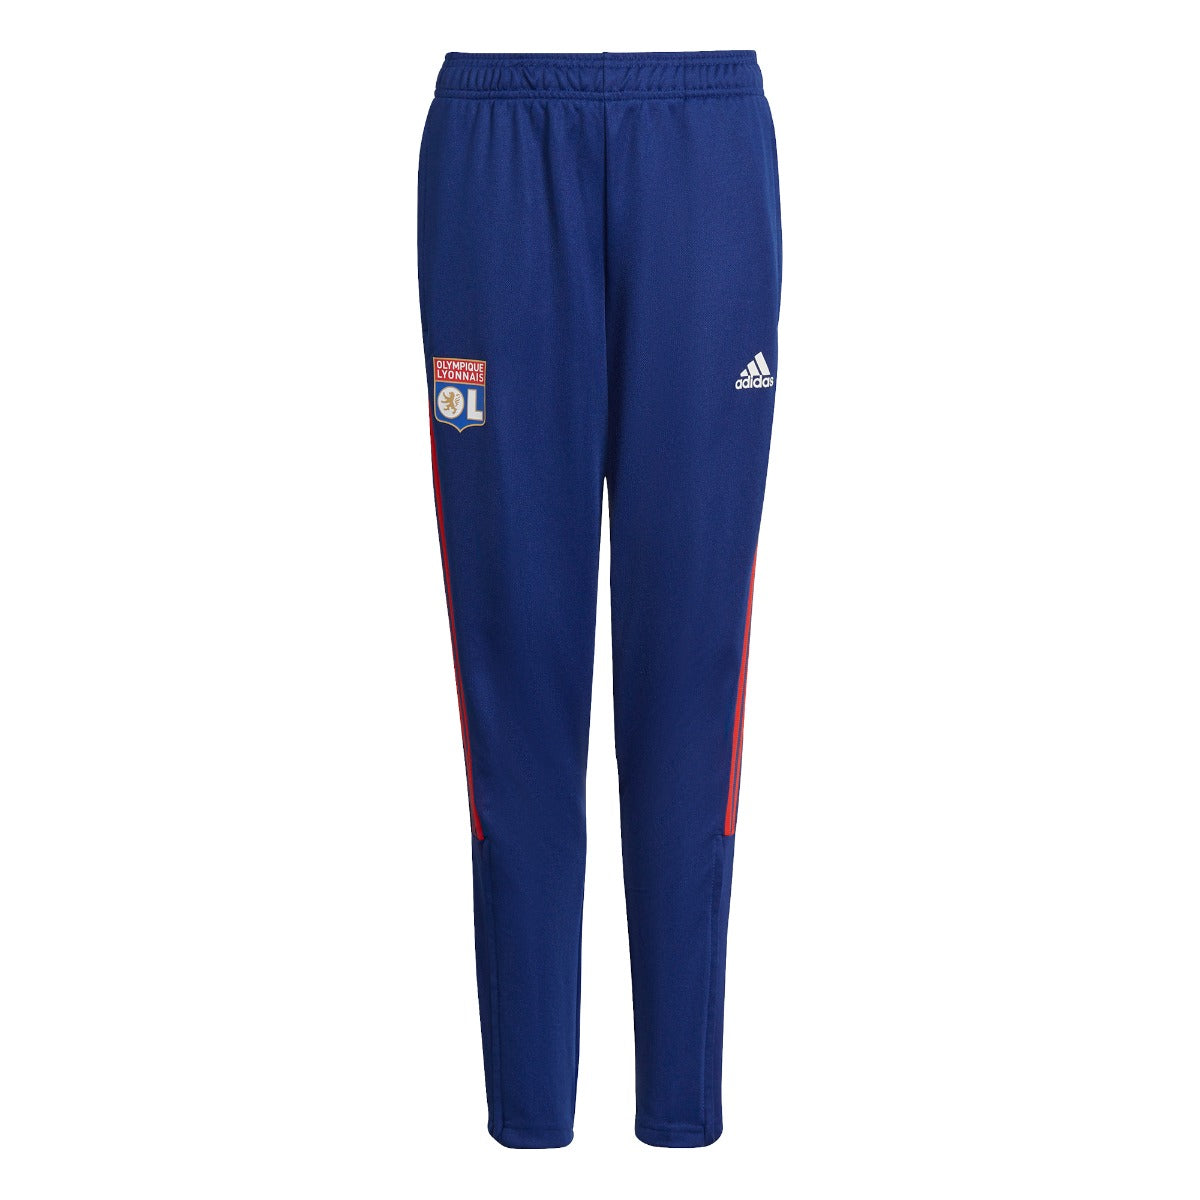 Pantalón de entrenamiento OL Júnior 2021/2022 - Azul/Rojo